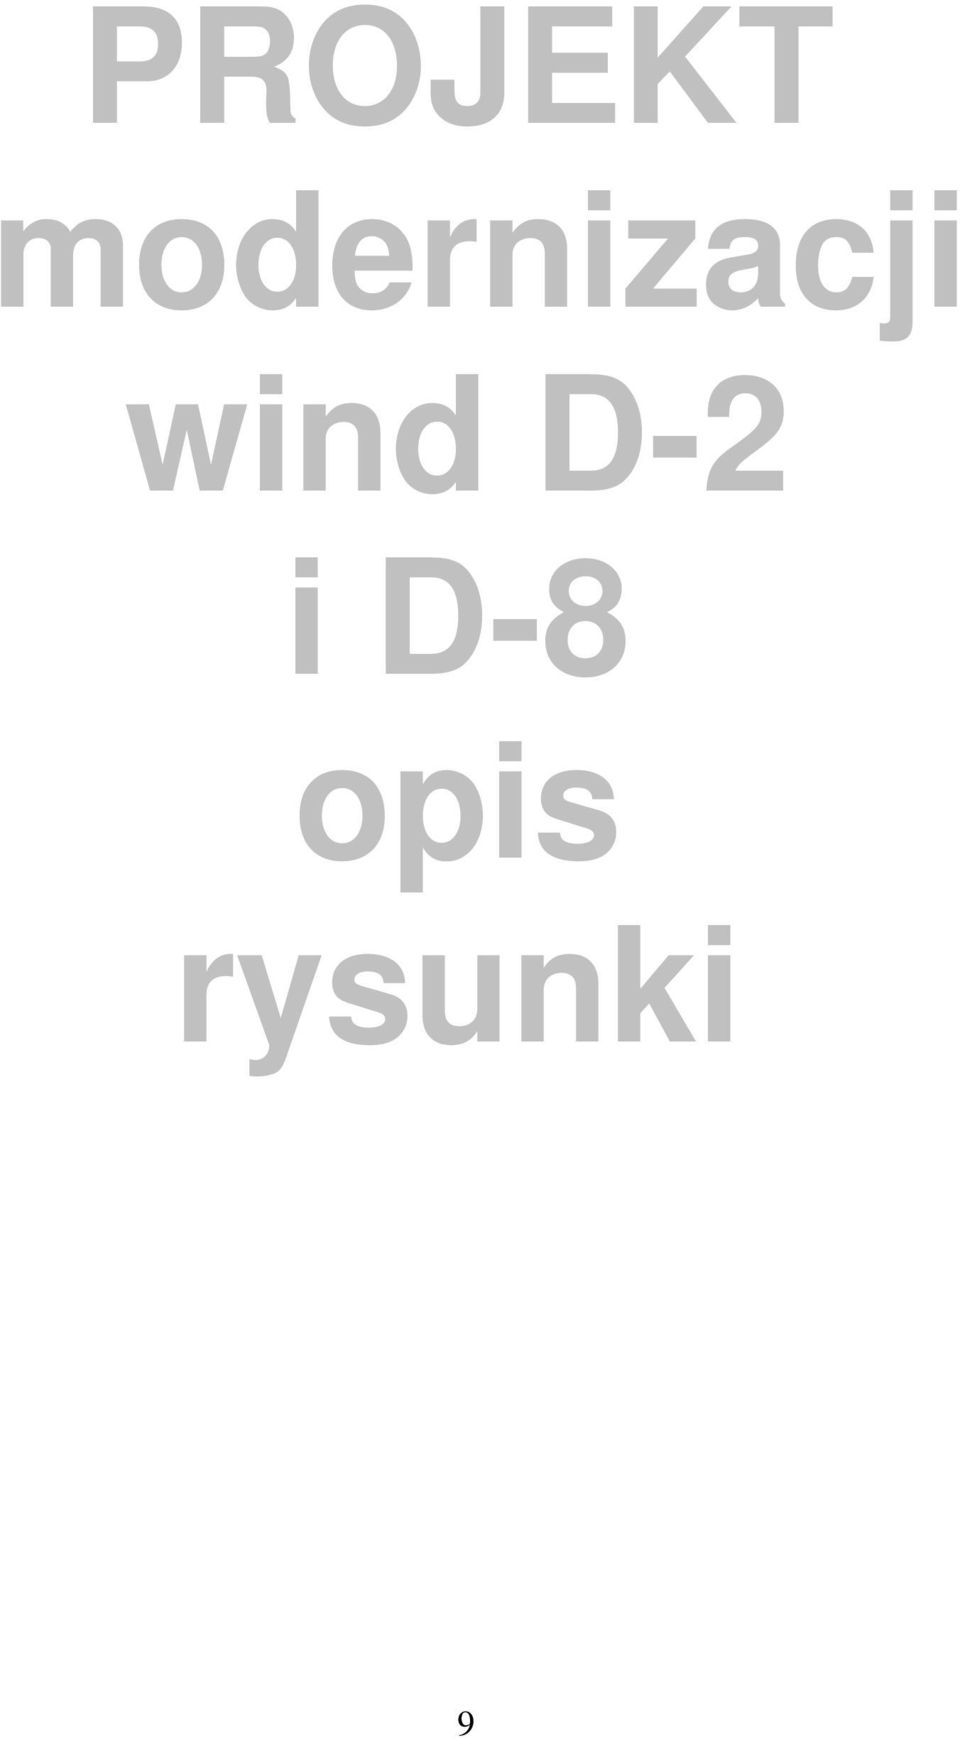 wind D-2 i